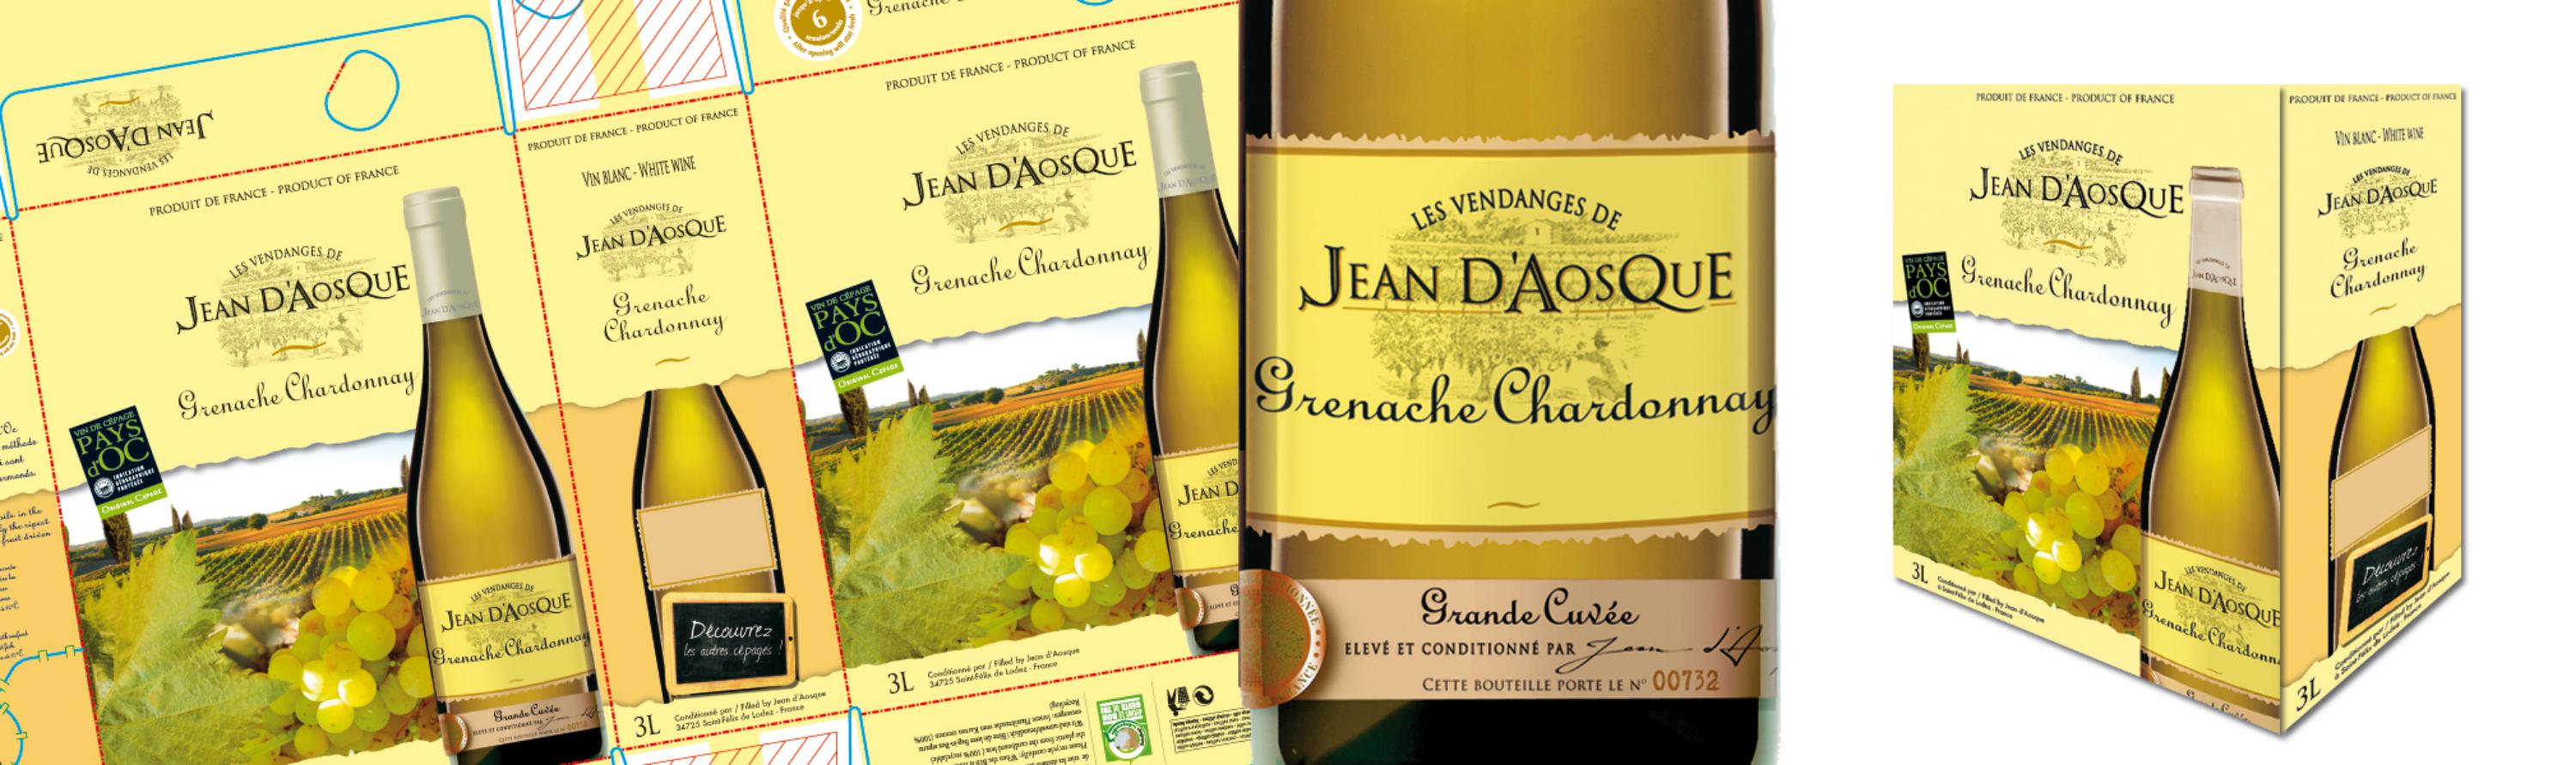 Bag-in-box Jean d'Aosque Grenache Chardonnay